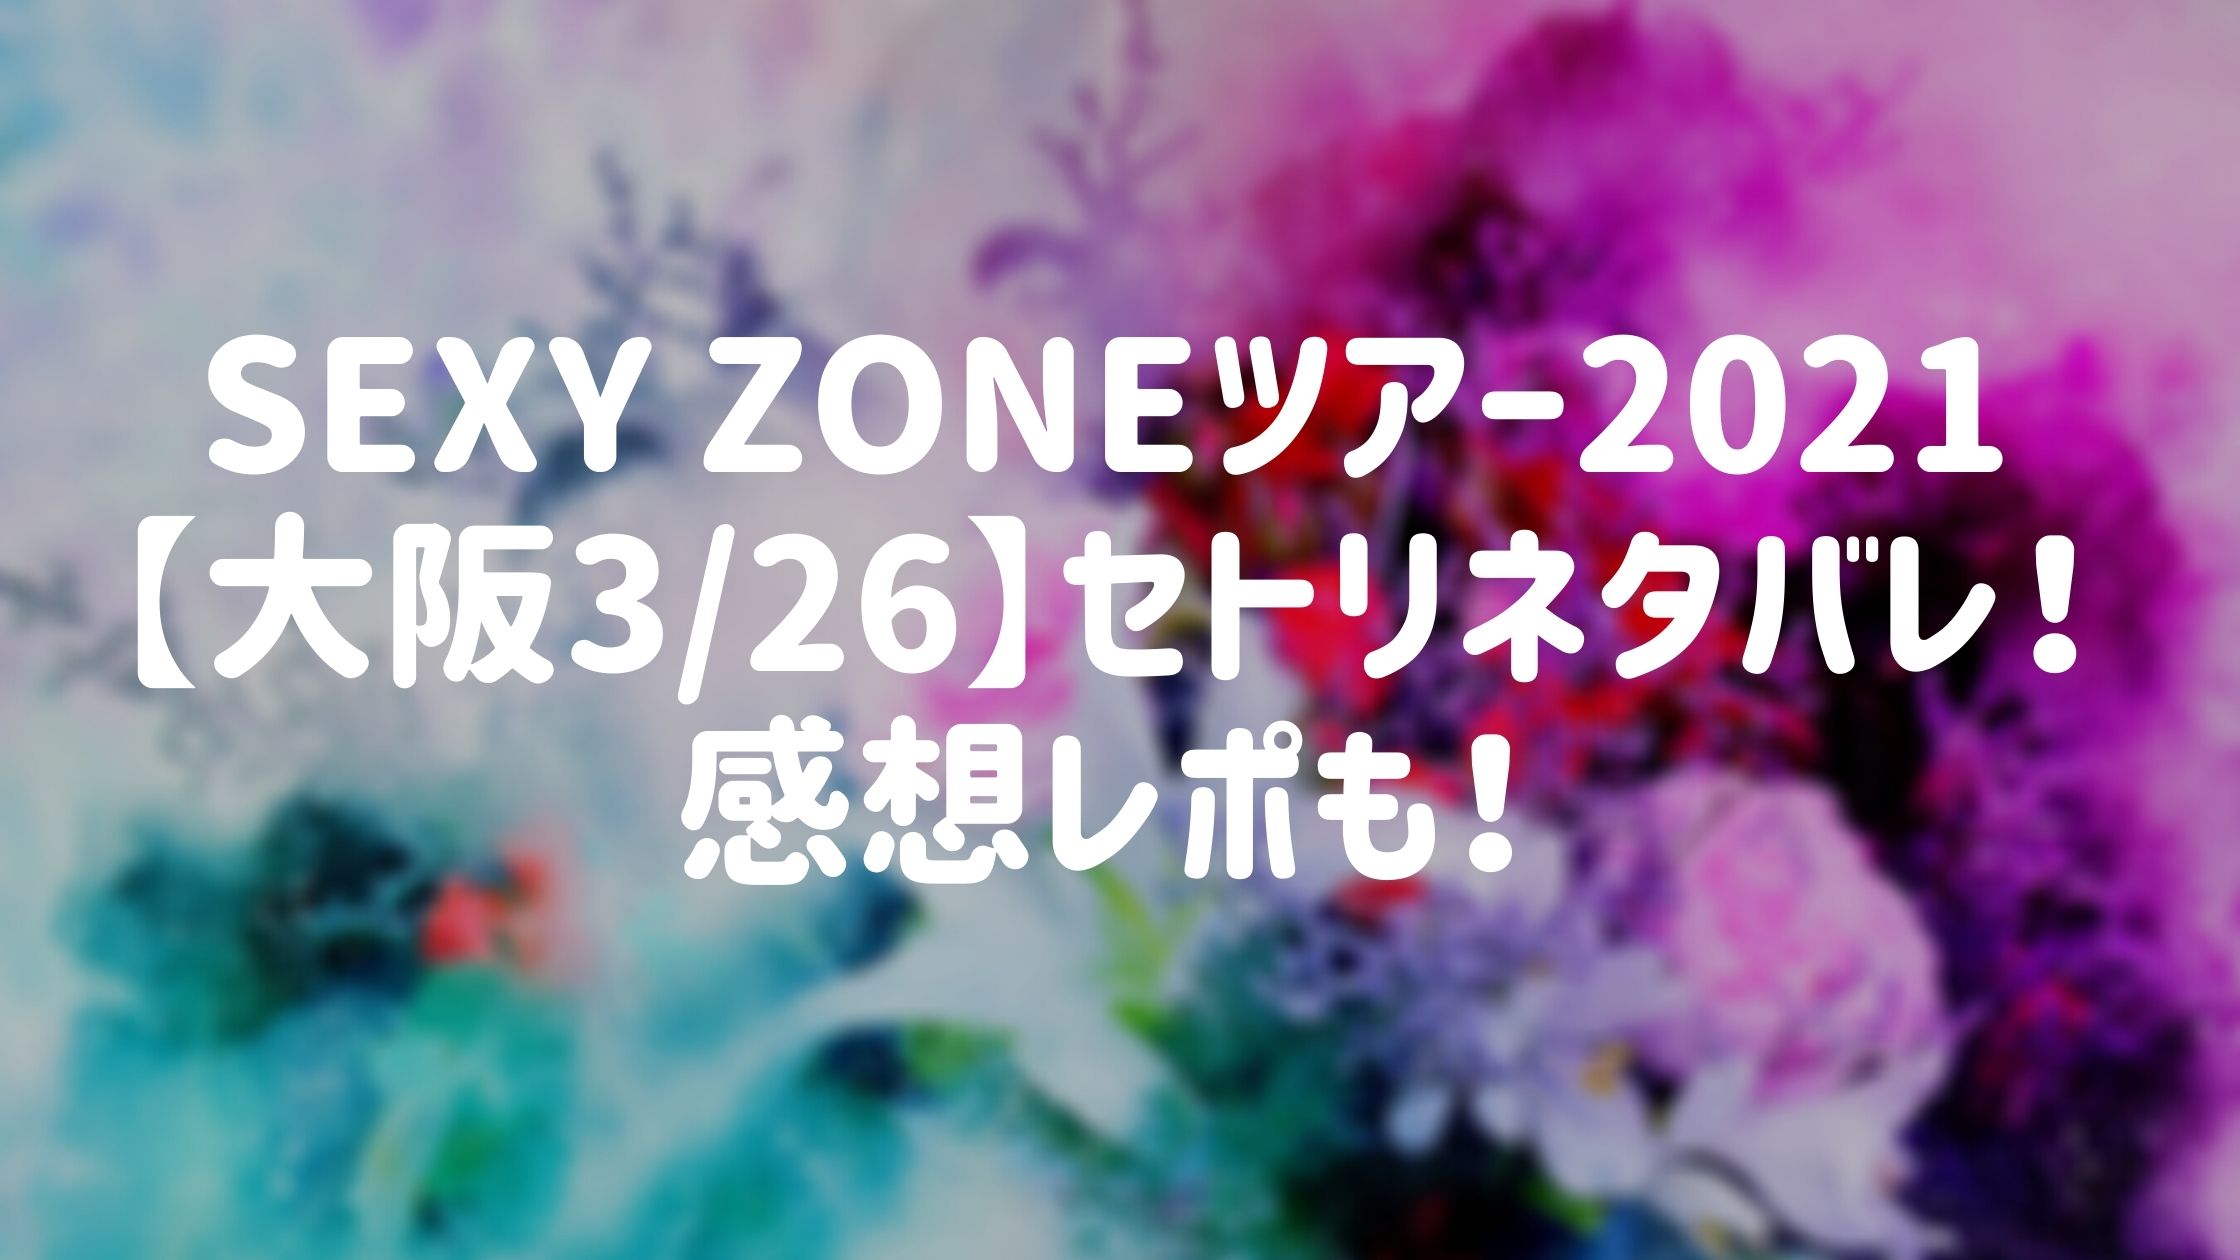 Sexy Zoneツアー21 大阪3 26 セトリネタバレ 感想レポも Naohana Blog